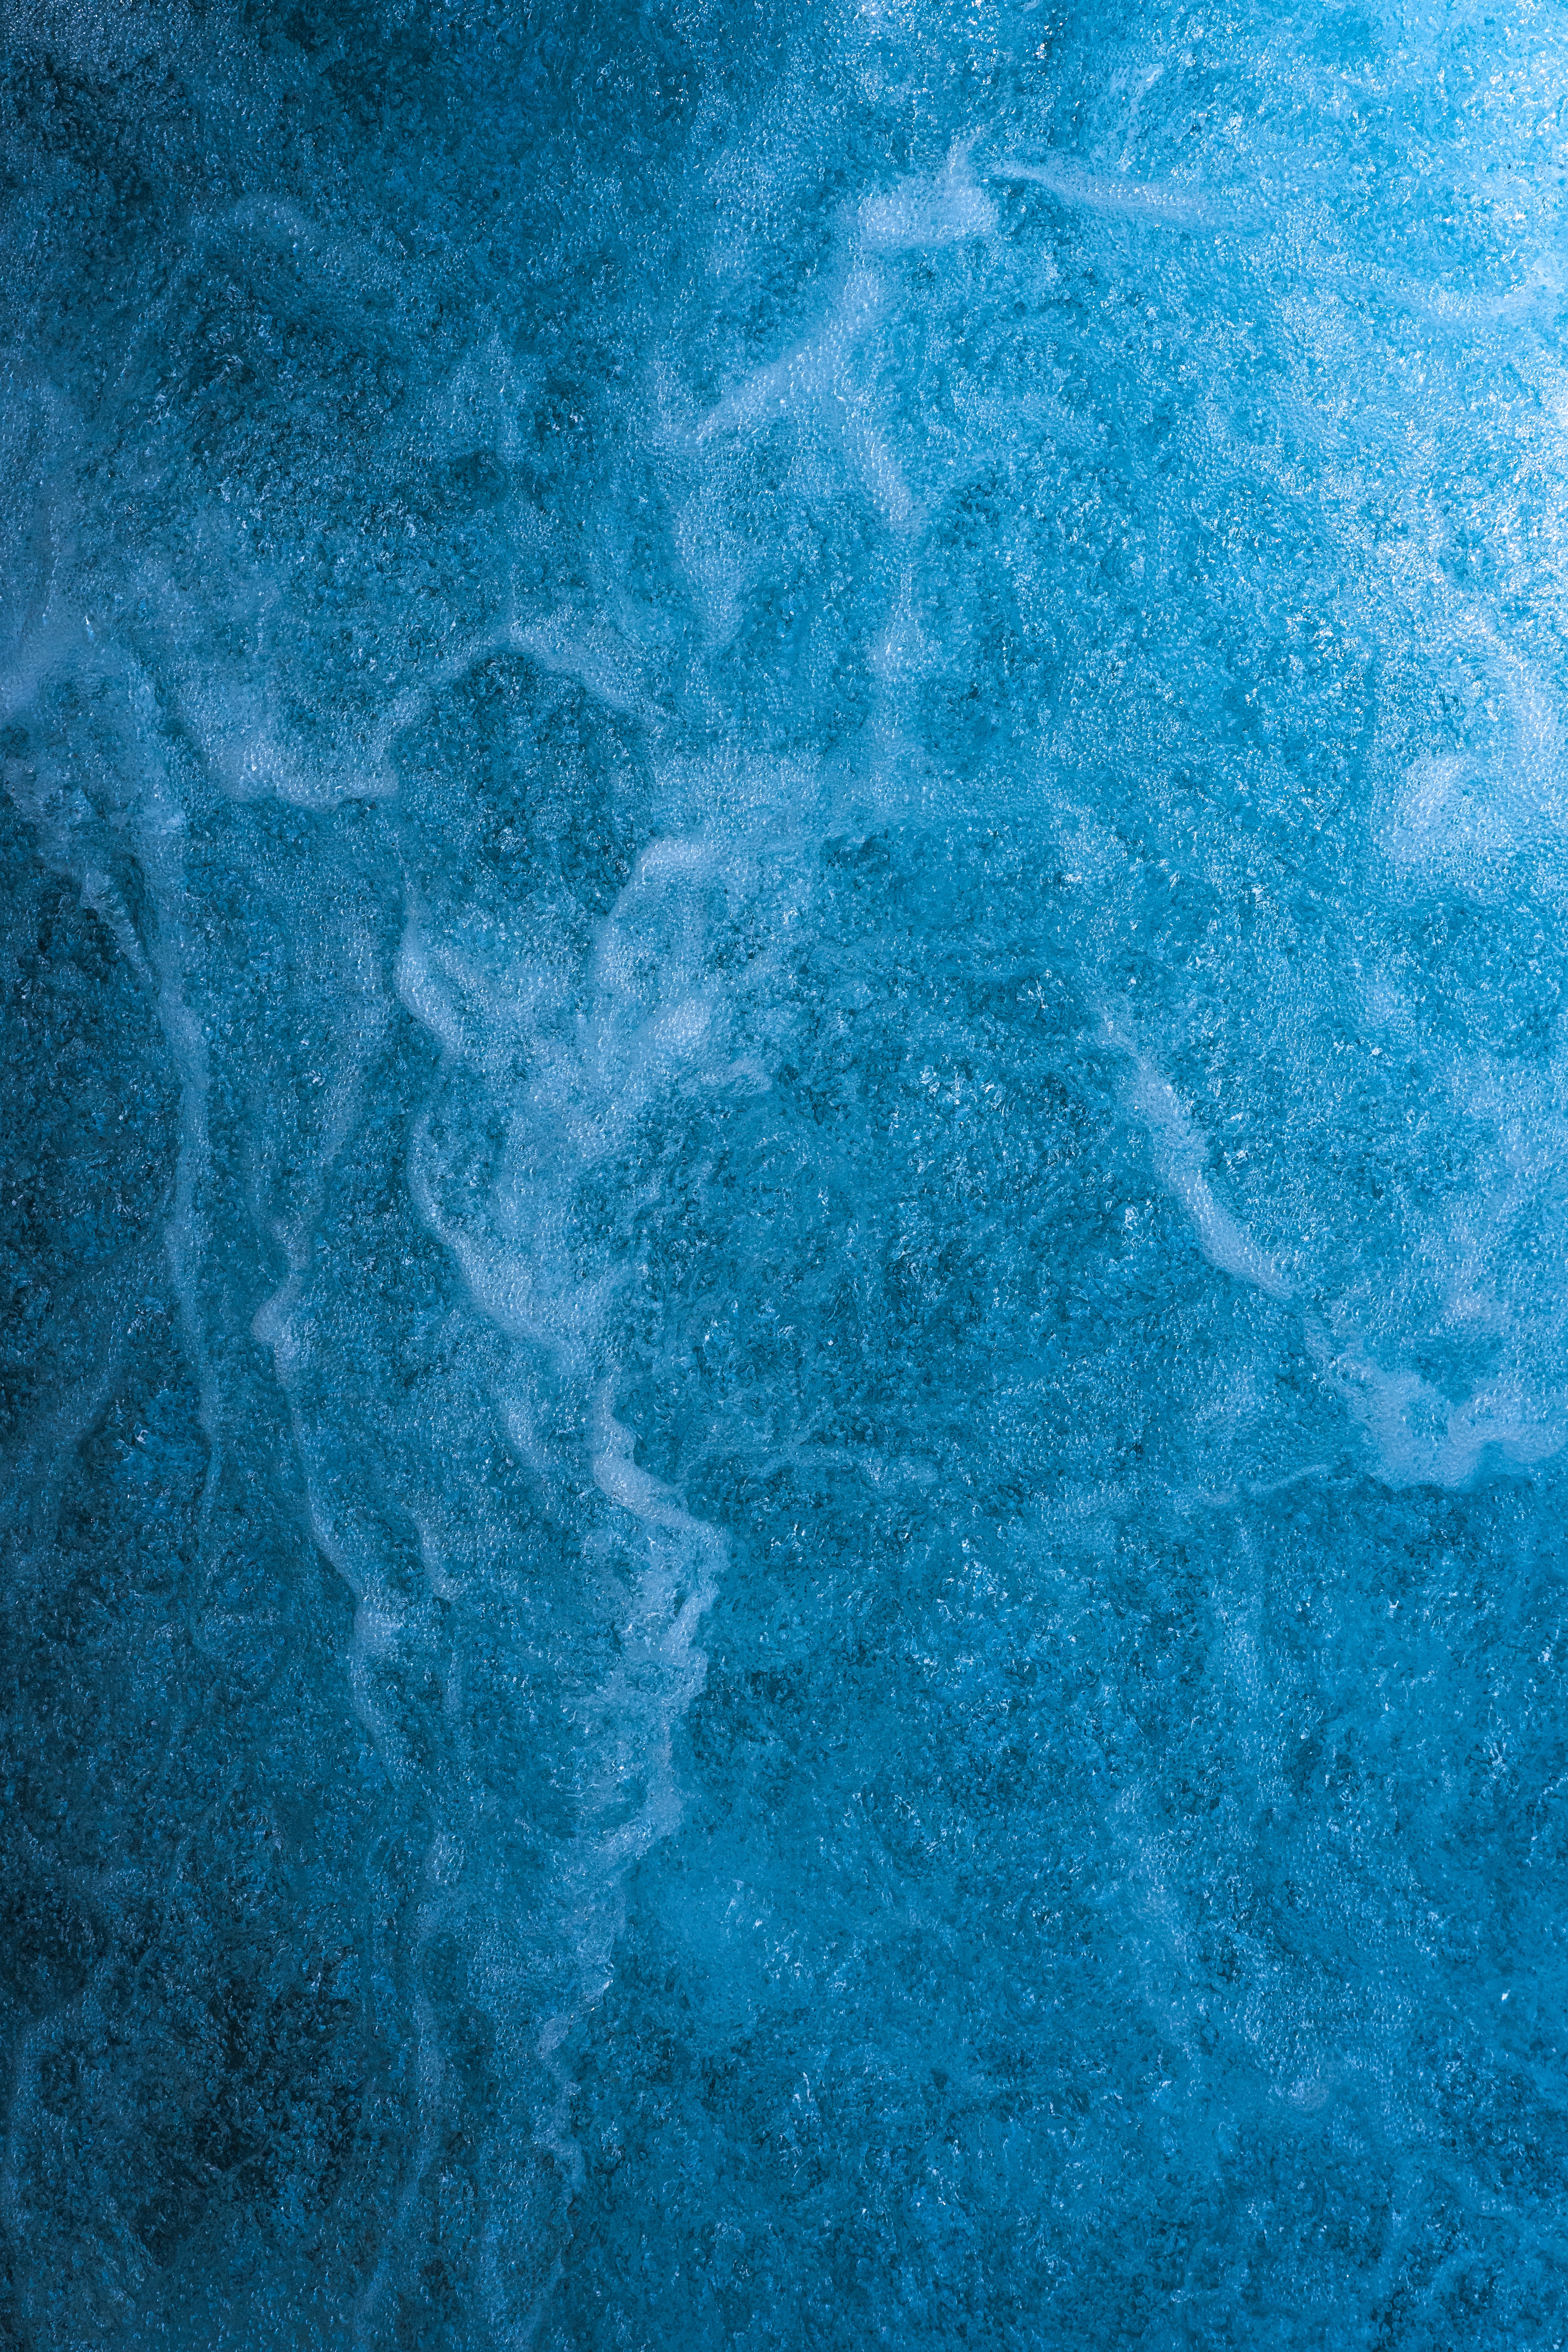 textures, texture, water, waves, blue, liquid phone background